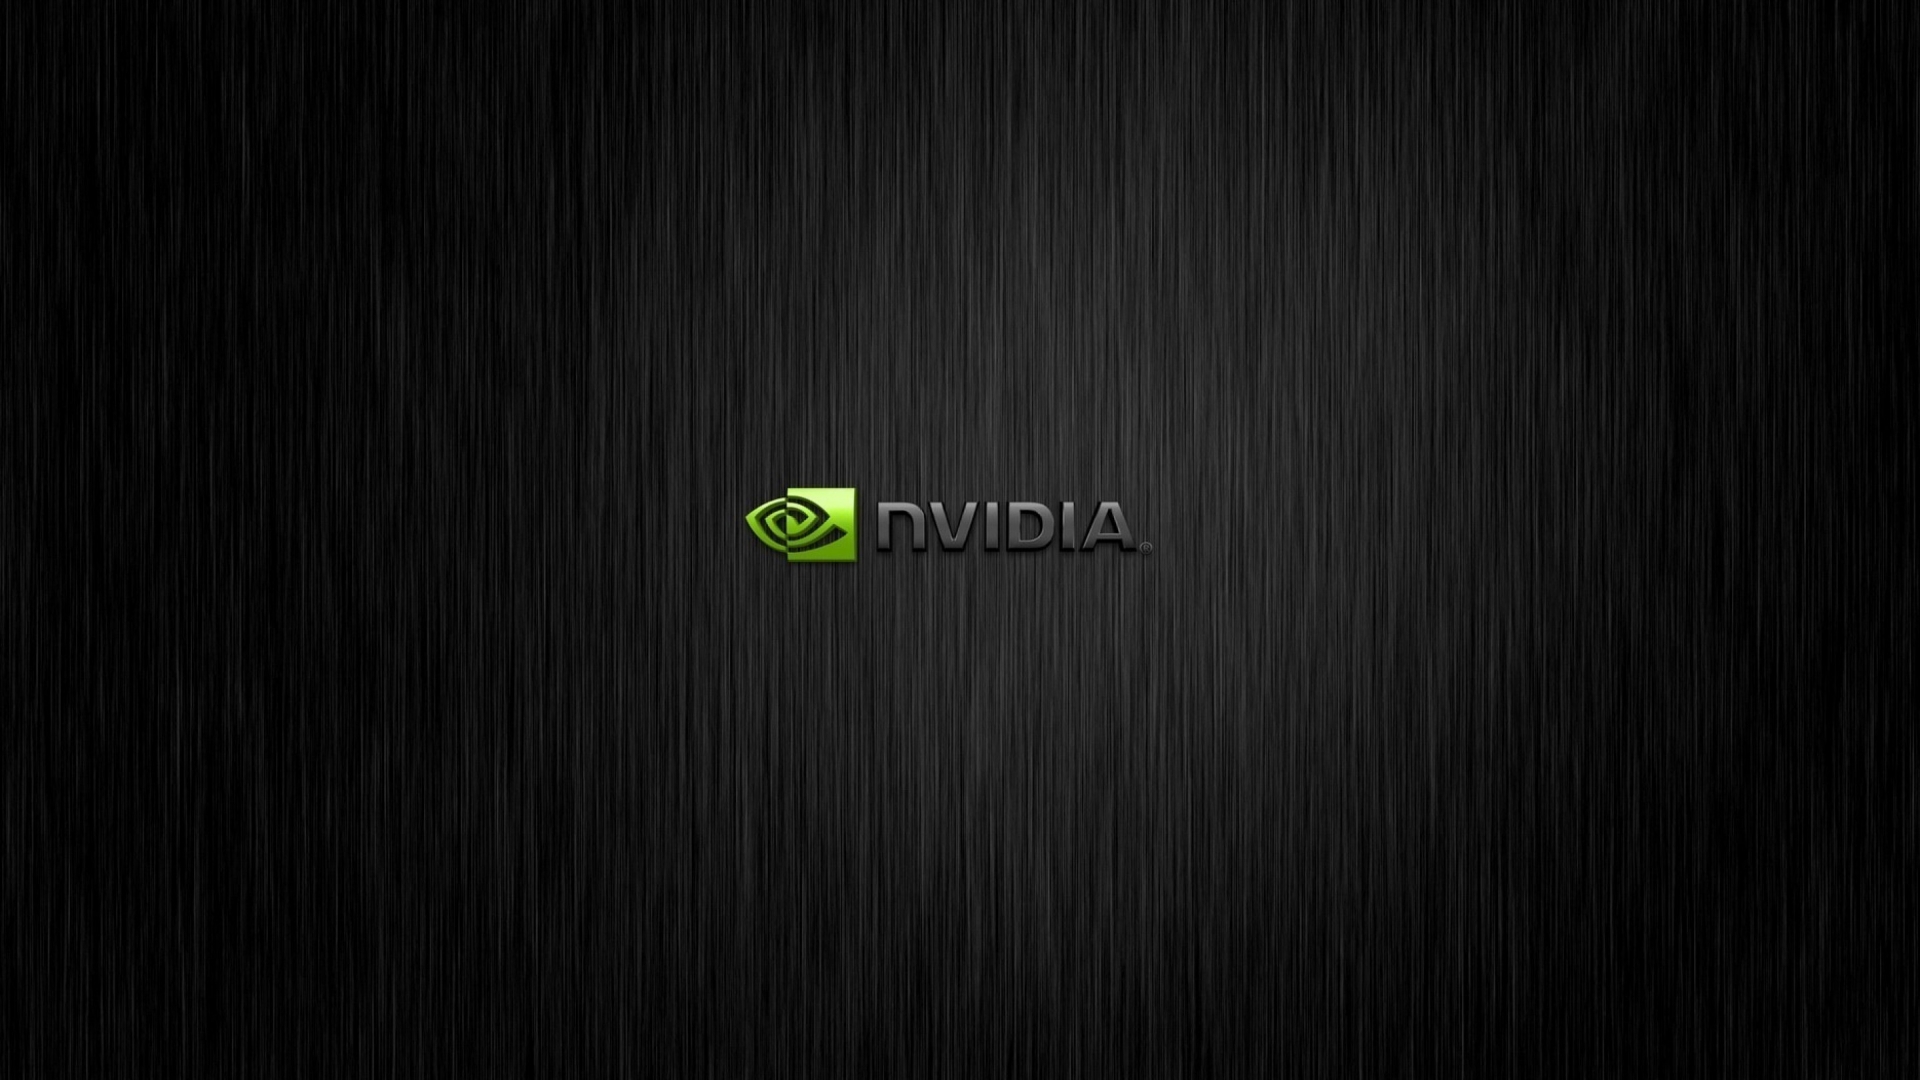 Nvidia Logo Black HD Desktop Wallpaper Widescreen Background For